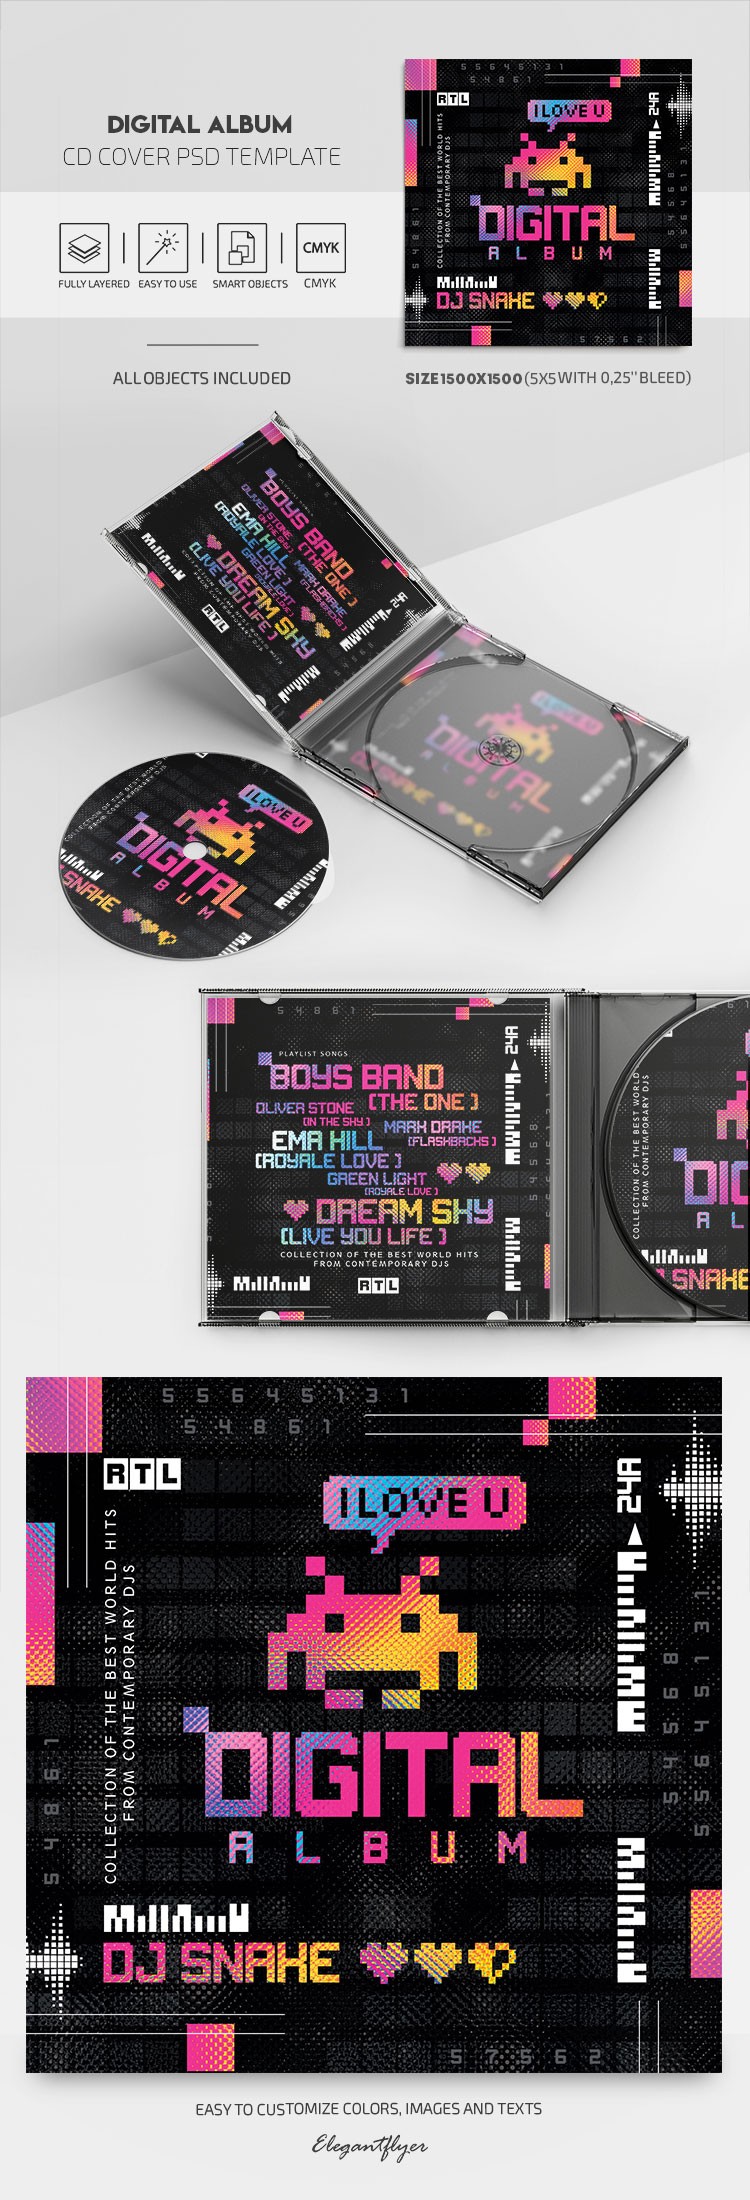 Capa de CD do Álbum Digital by ElegantFlyer